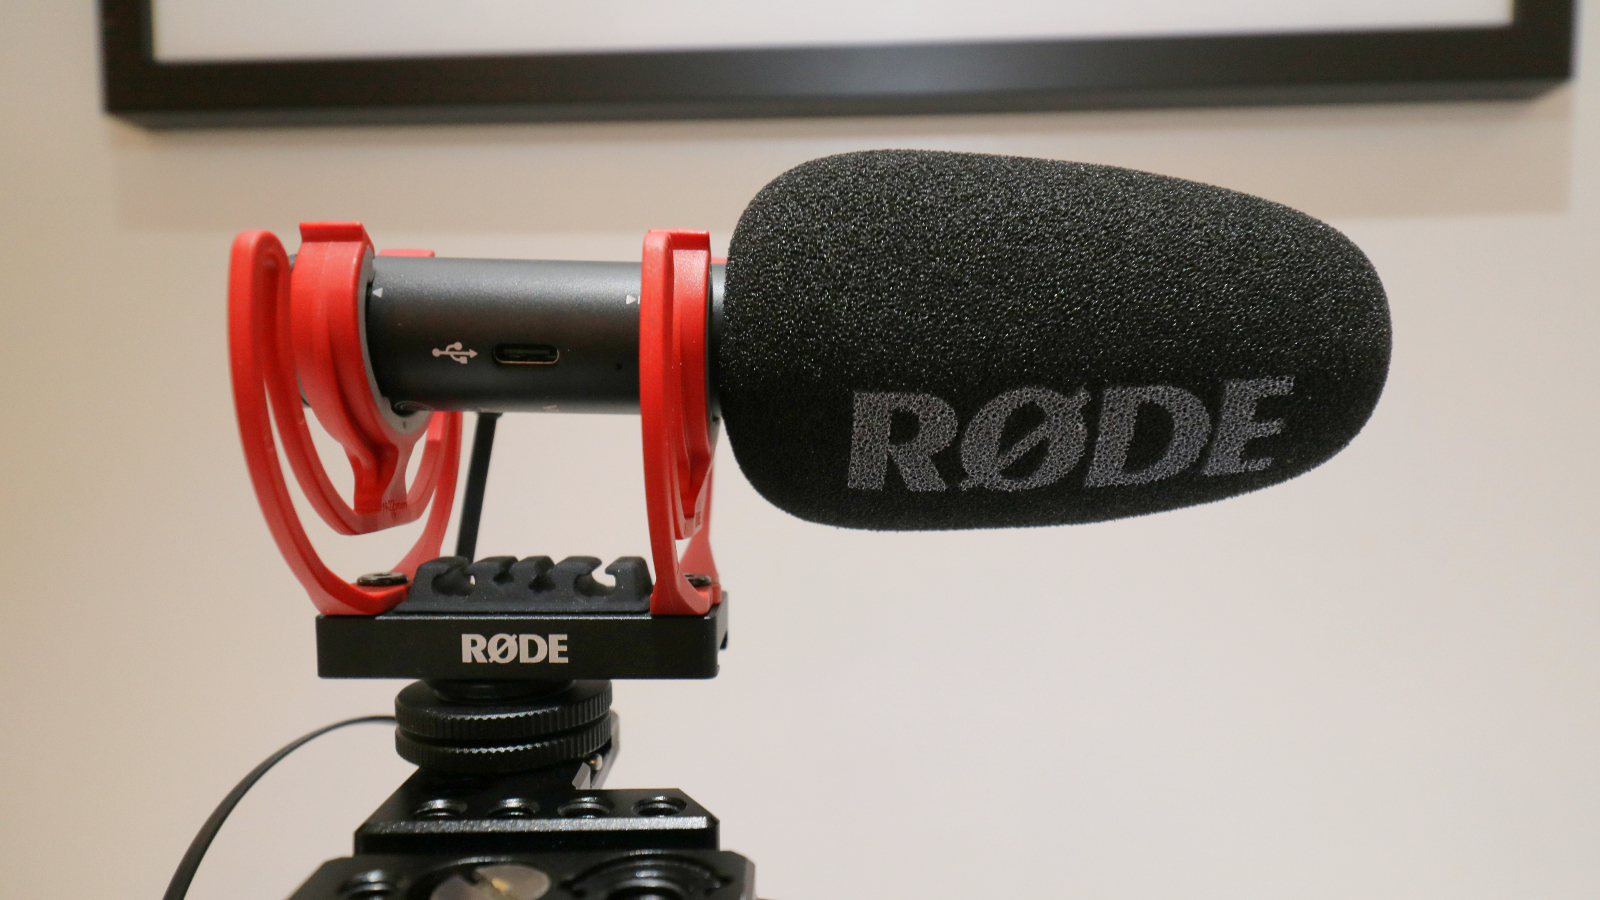 RODE VideoMic GO II Camera-Mount Shotgun Microphone Kit for Computers